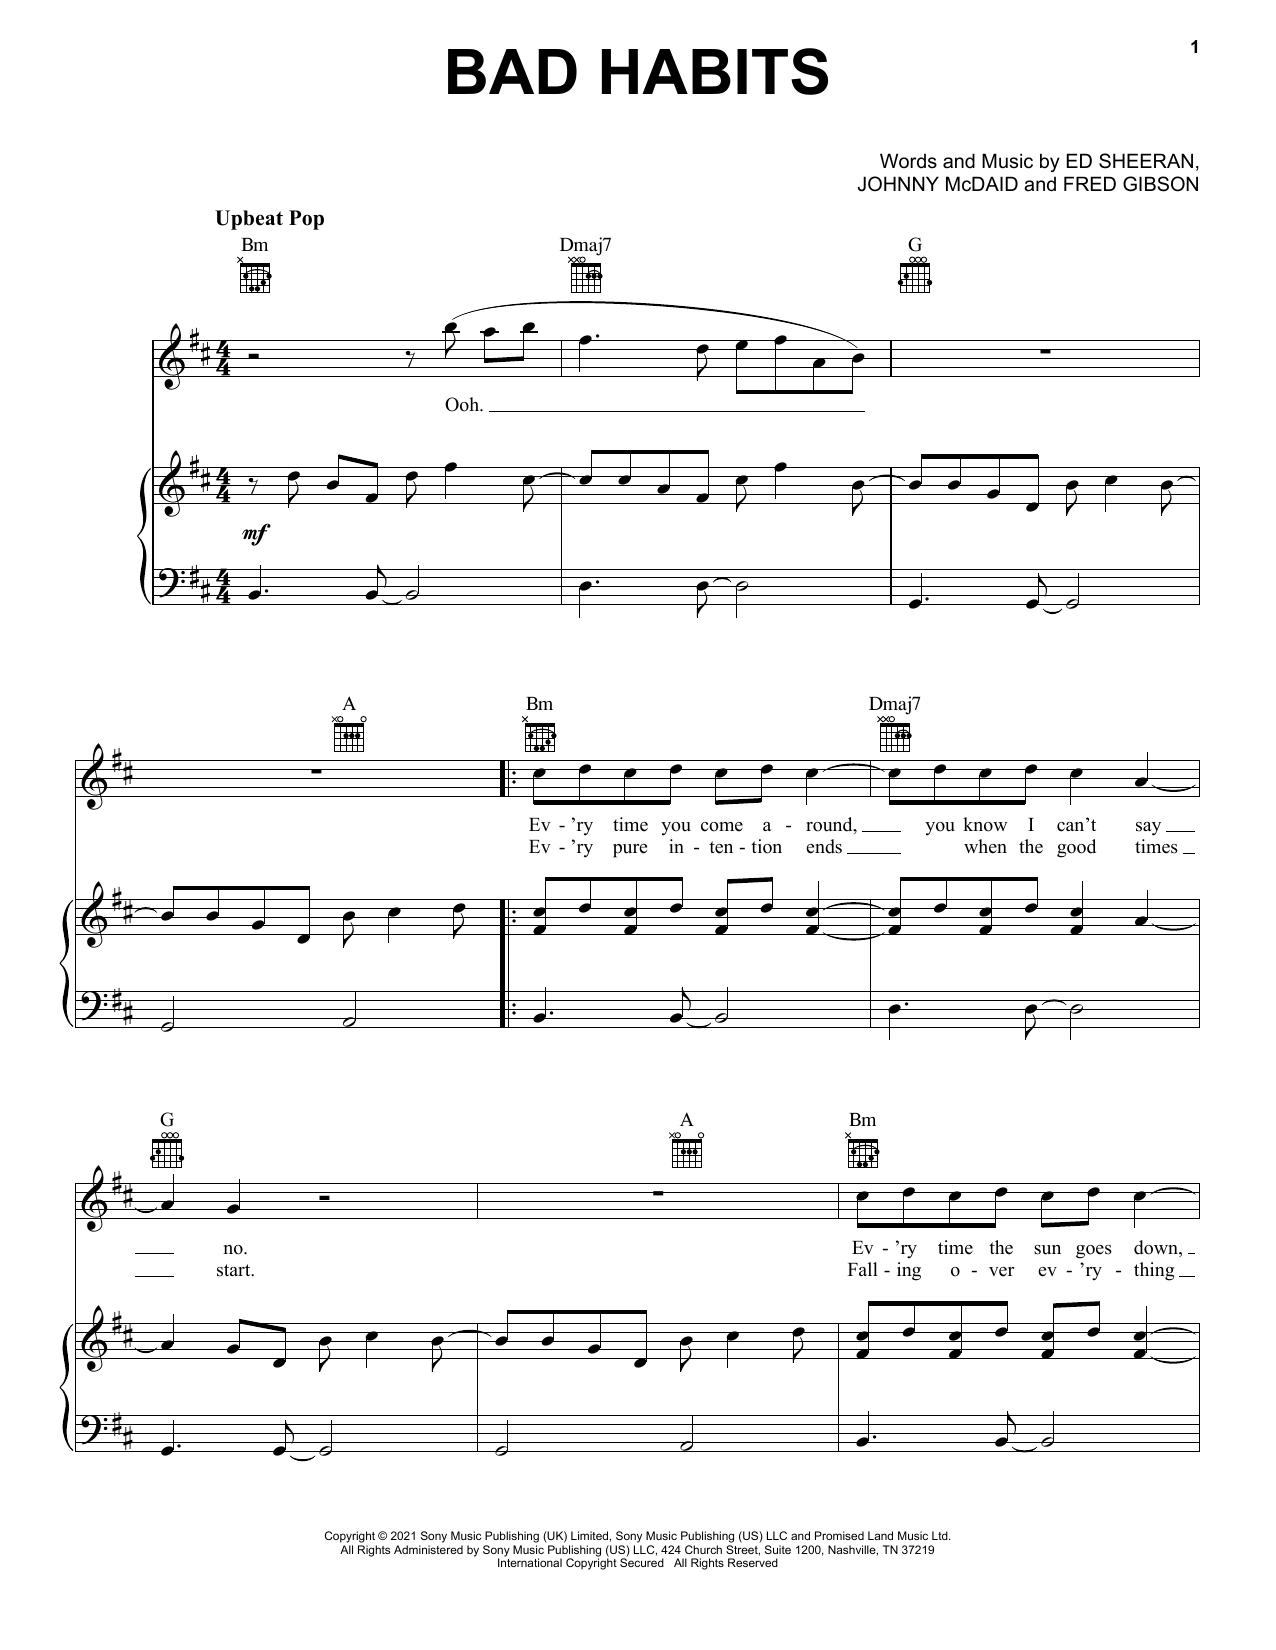 Ed Sheeran Bad Habits Sheet Music Notes & Chords for Piano, Vocal & Guitar (Right-Hand Melody) - Download or Print PDF